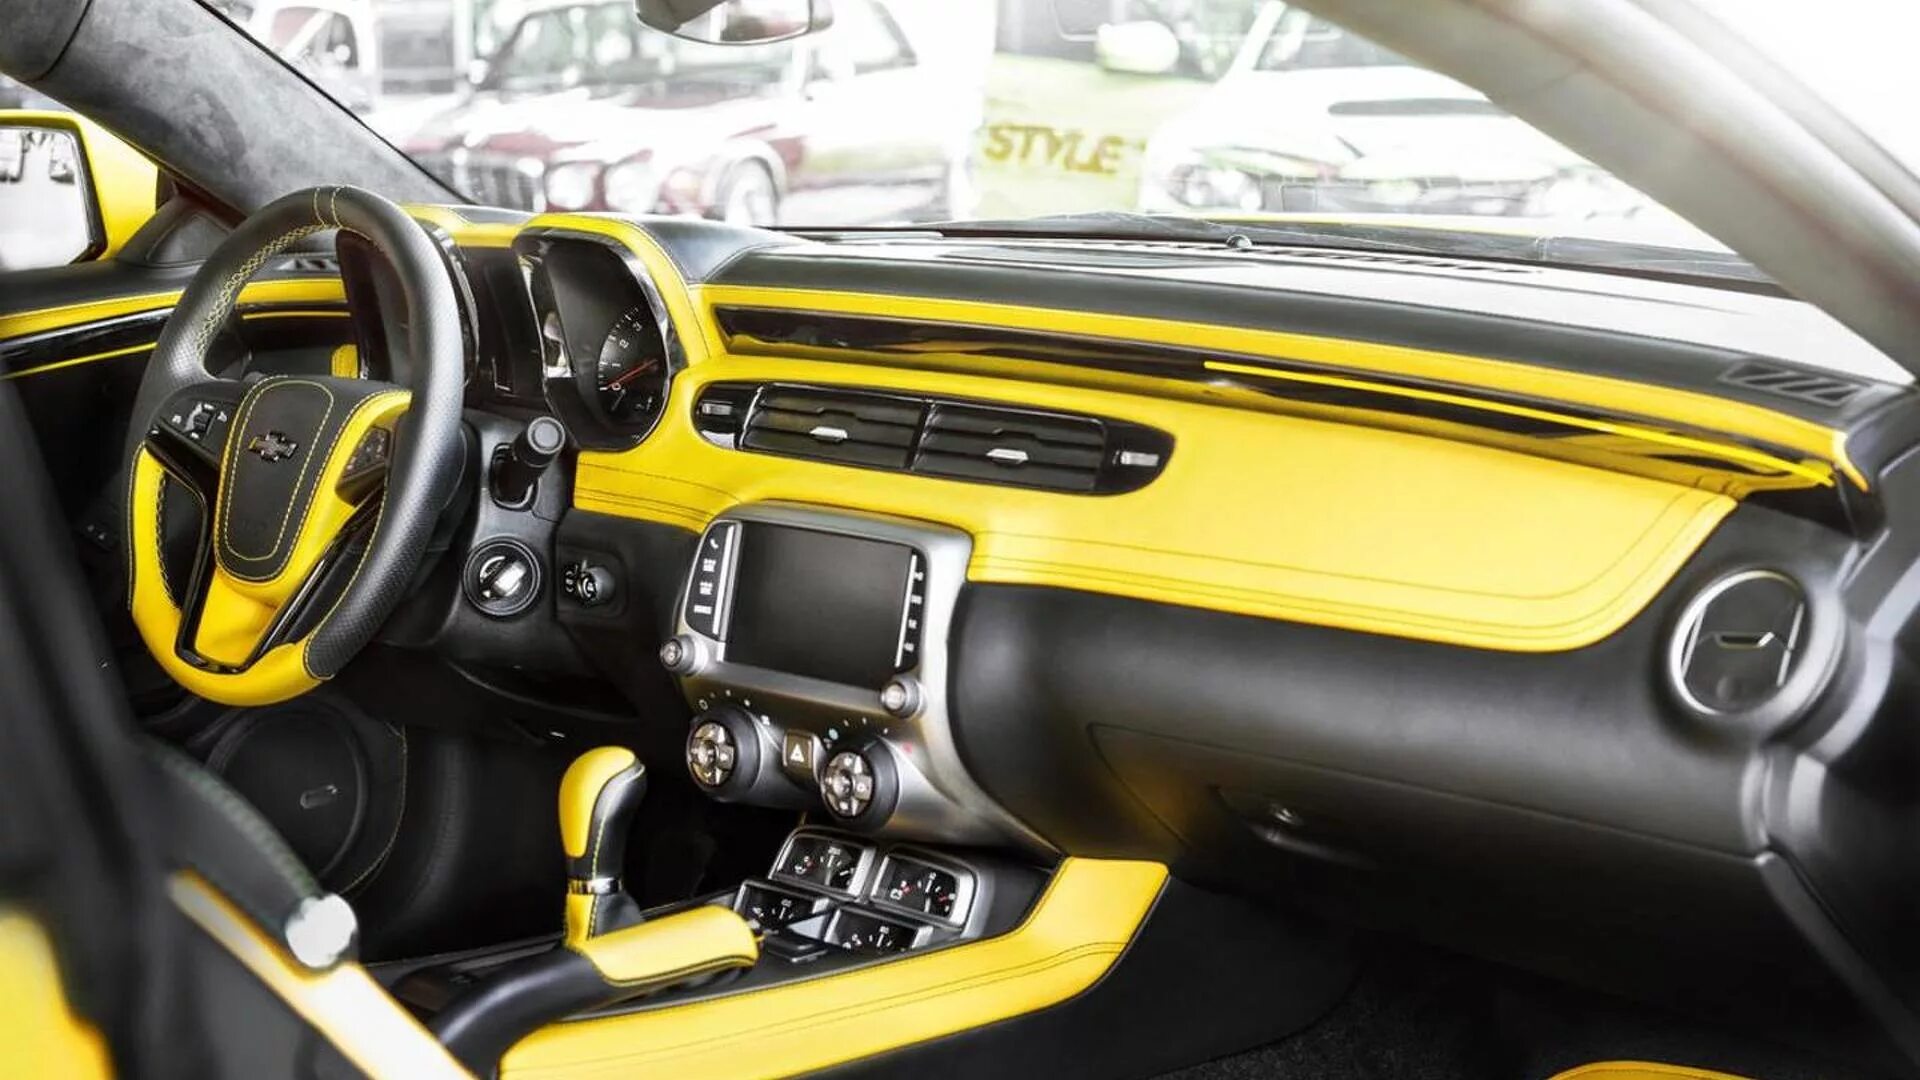 Шевроле камаро салон. Chevrolet Camaro 2020 салон жёлтый. Chevrolet Camaro салон. Chevrolet Camaro салон желтый. Шевроле Камаро zl1 салон.